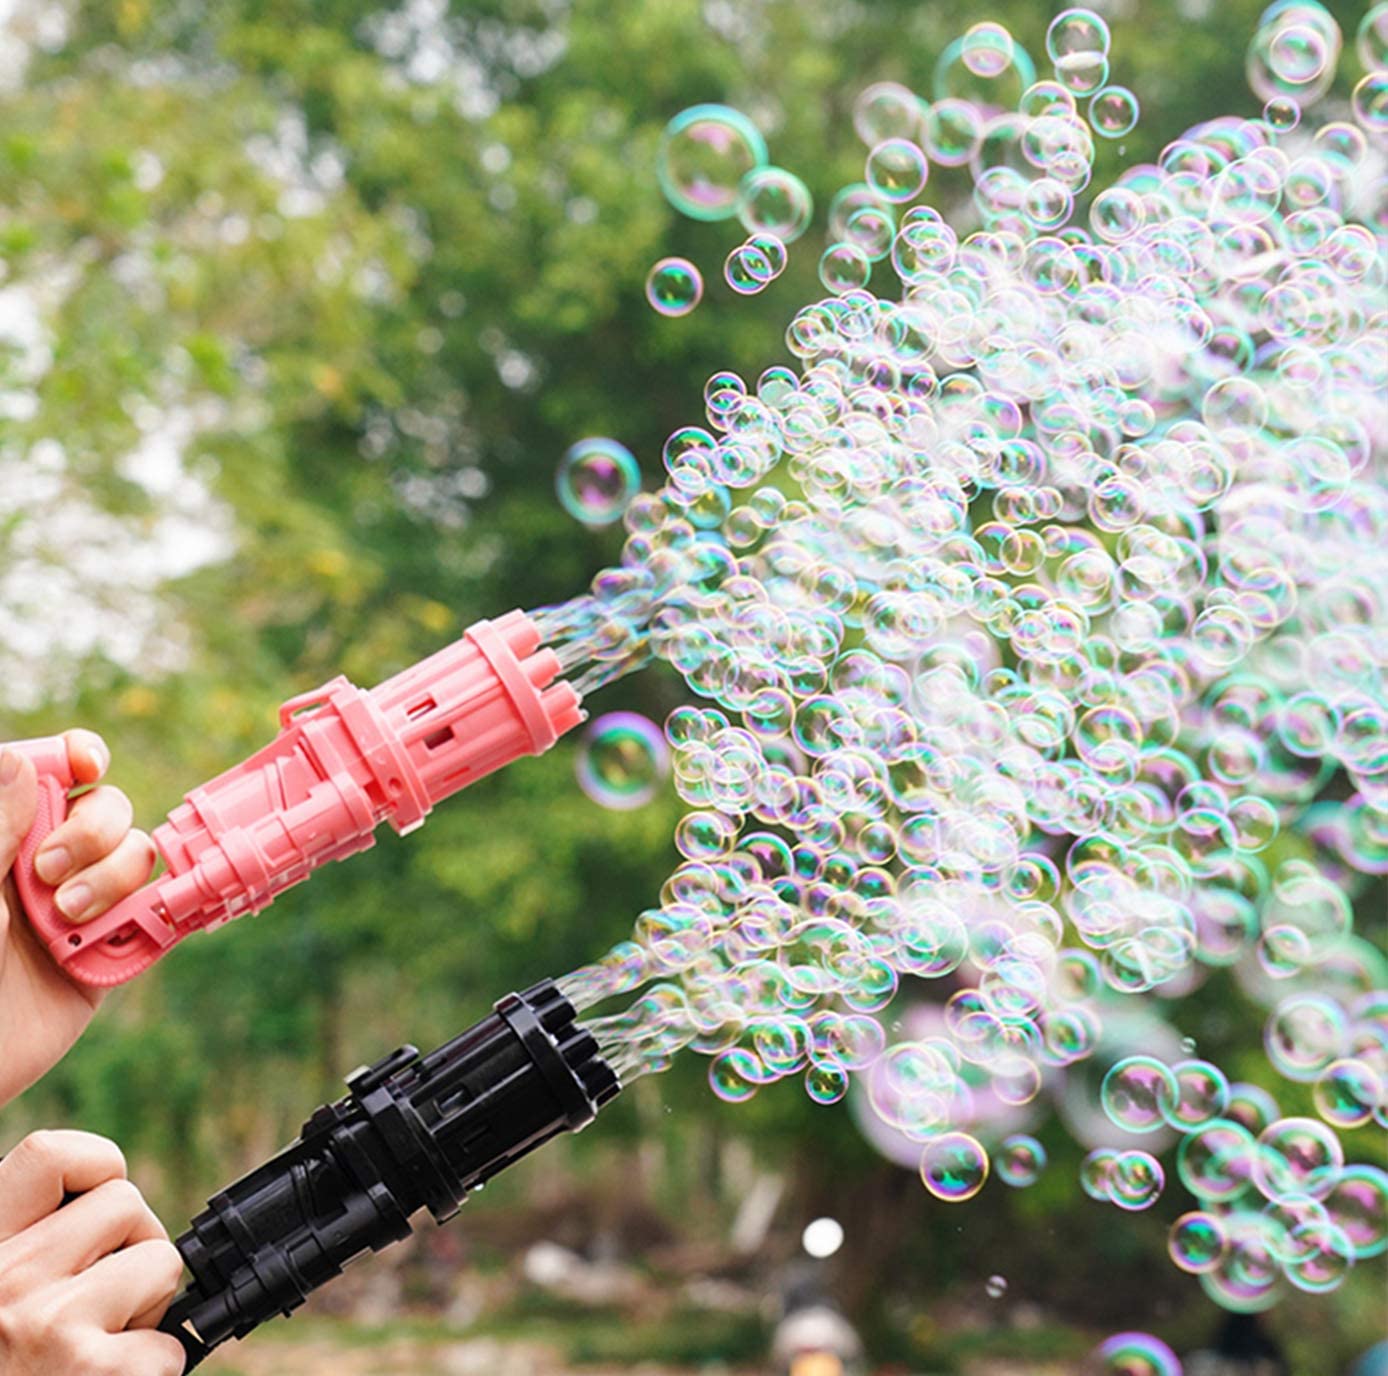 8-Hole Bubble Gun Machine -Toy gun With Bubble liquid for Kids - Bubble Gun for Kids -